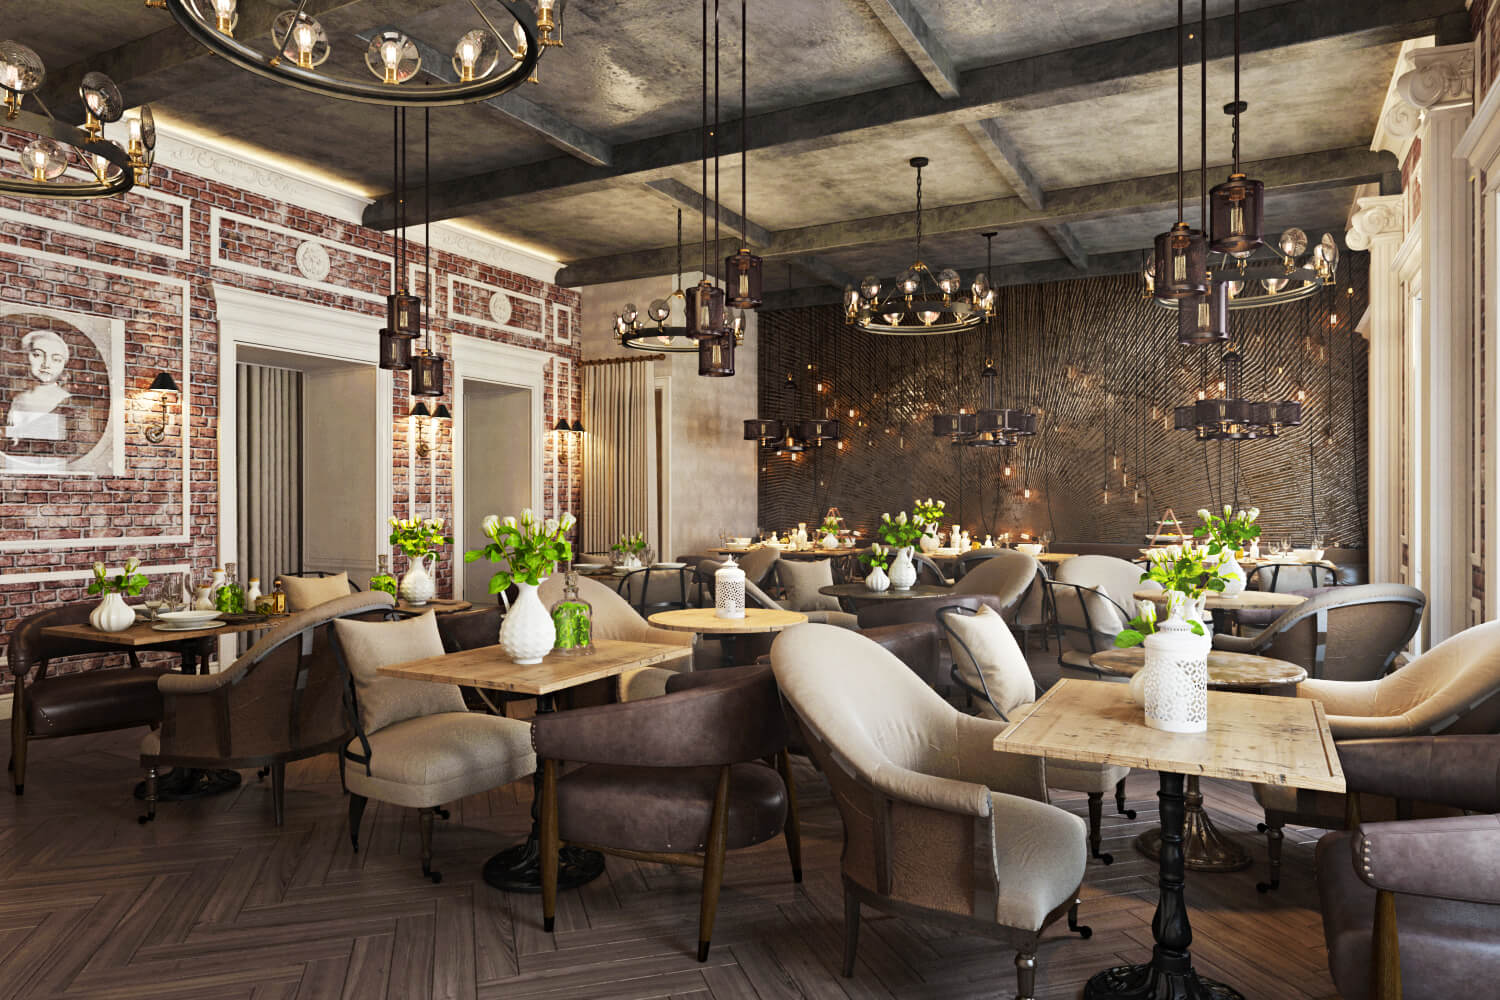 Stunning Restaurant Interior Design the Chic of Original - Decor10 Blog